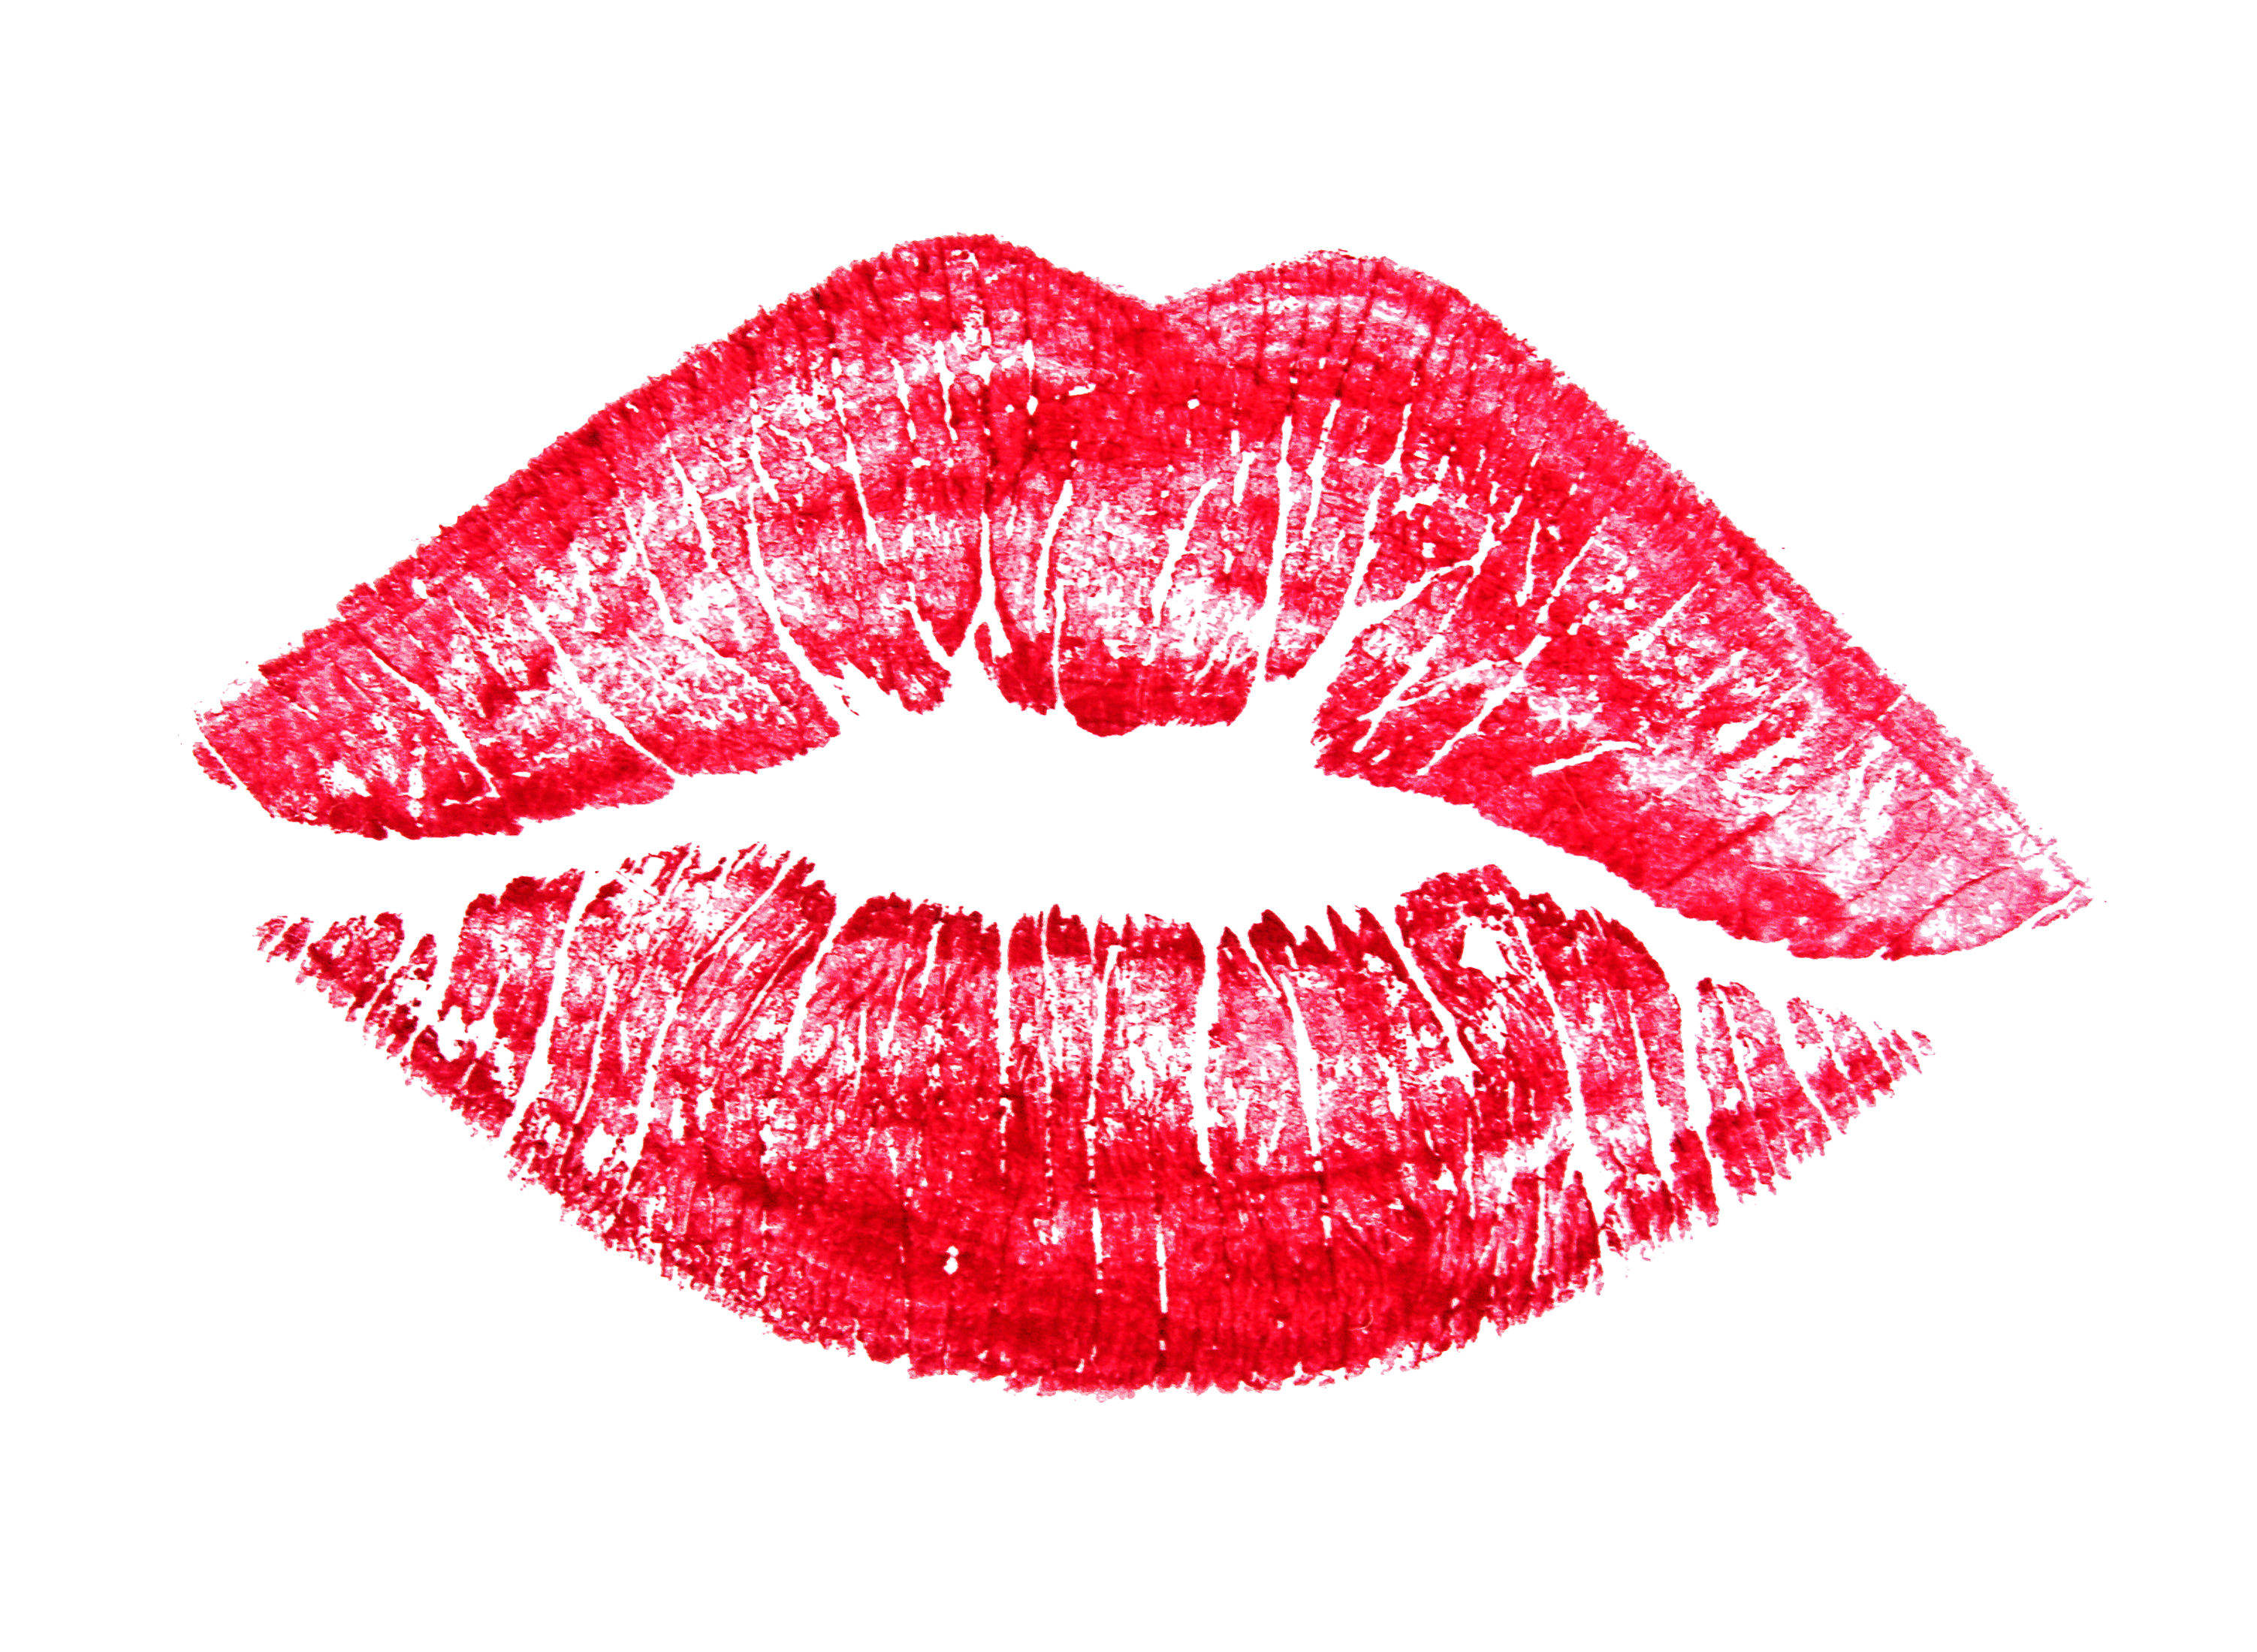 clip art of puckered lips - photo #42